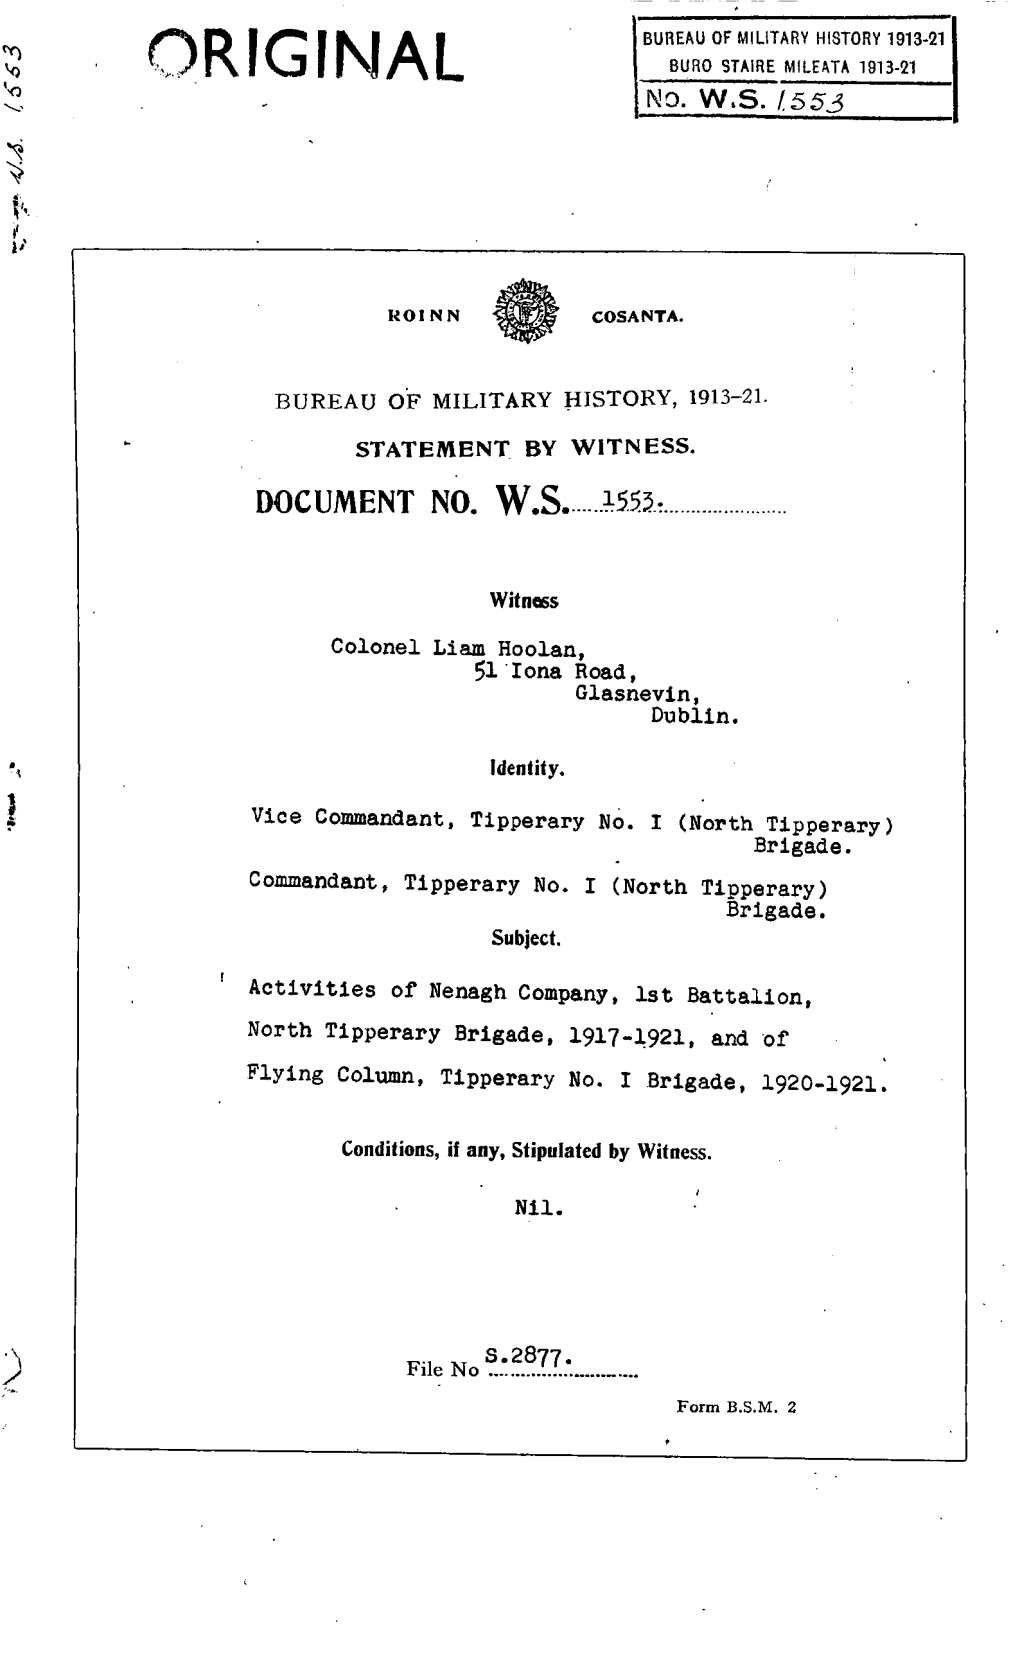 ROINN COSANTA. BUREAU of MILITARY HISTORY, 1913-21. STATEMENT by WITNESS. DOCUMENT NO. W.S. 5.55 Witness Colonel Liam Hoolan, 51